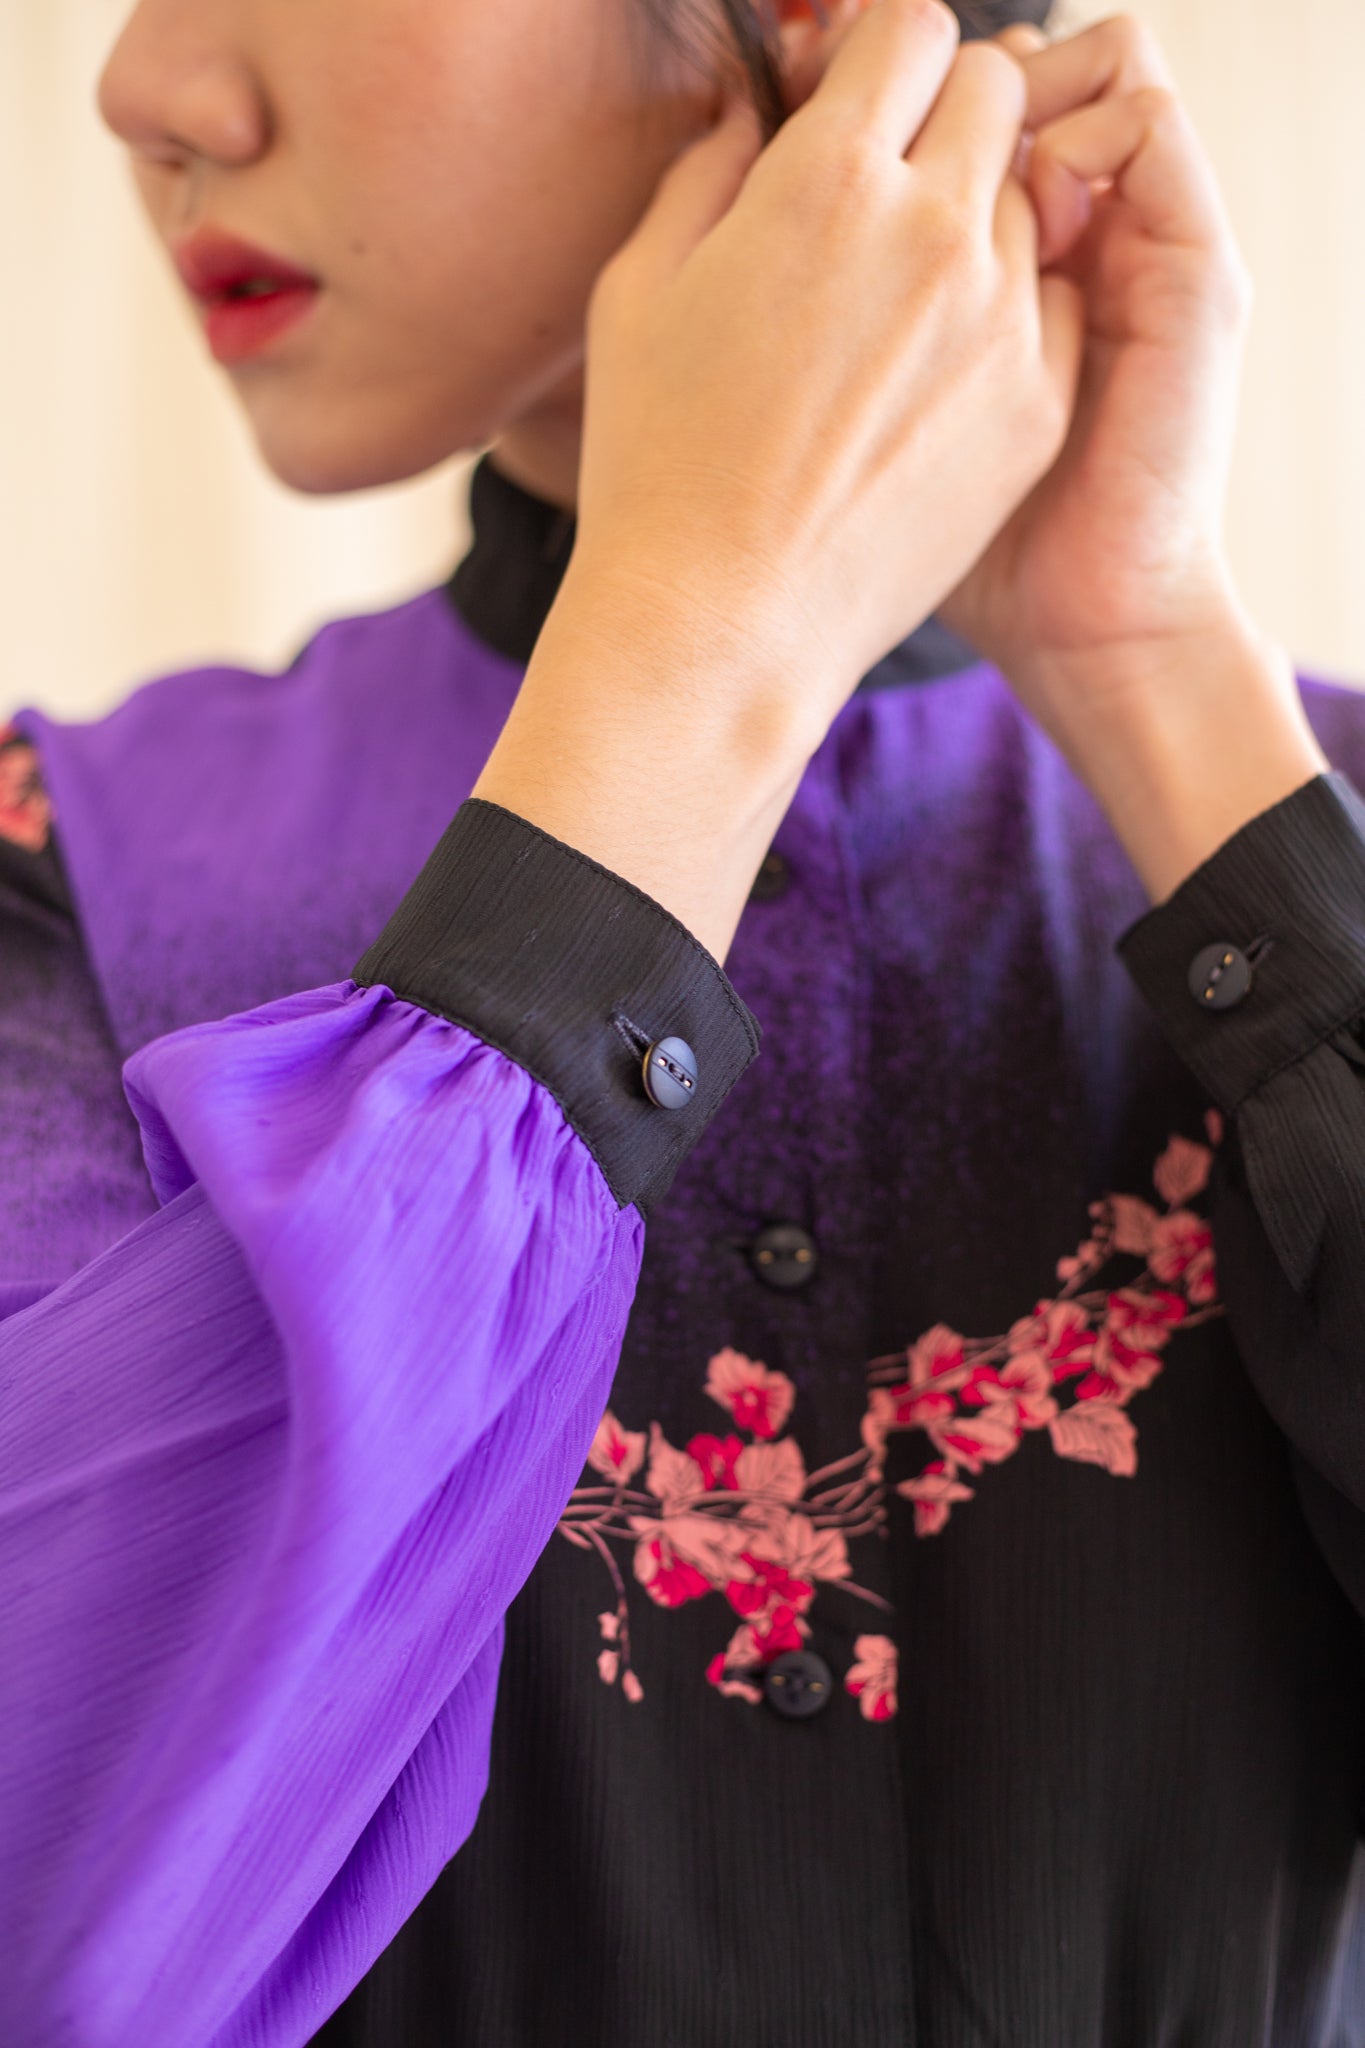 Mandarin collar in violet Japanese vintage dress with red floral print